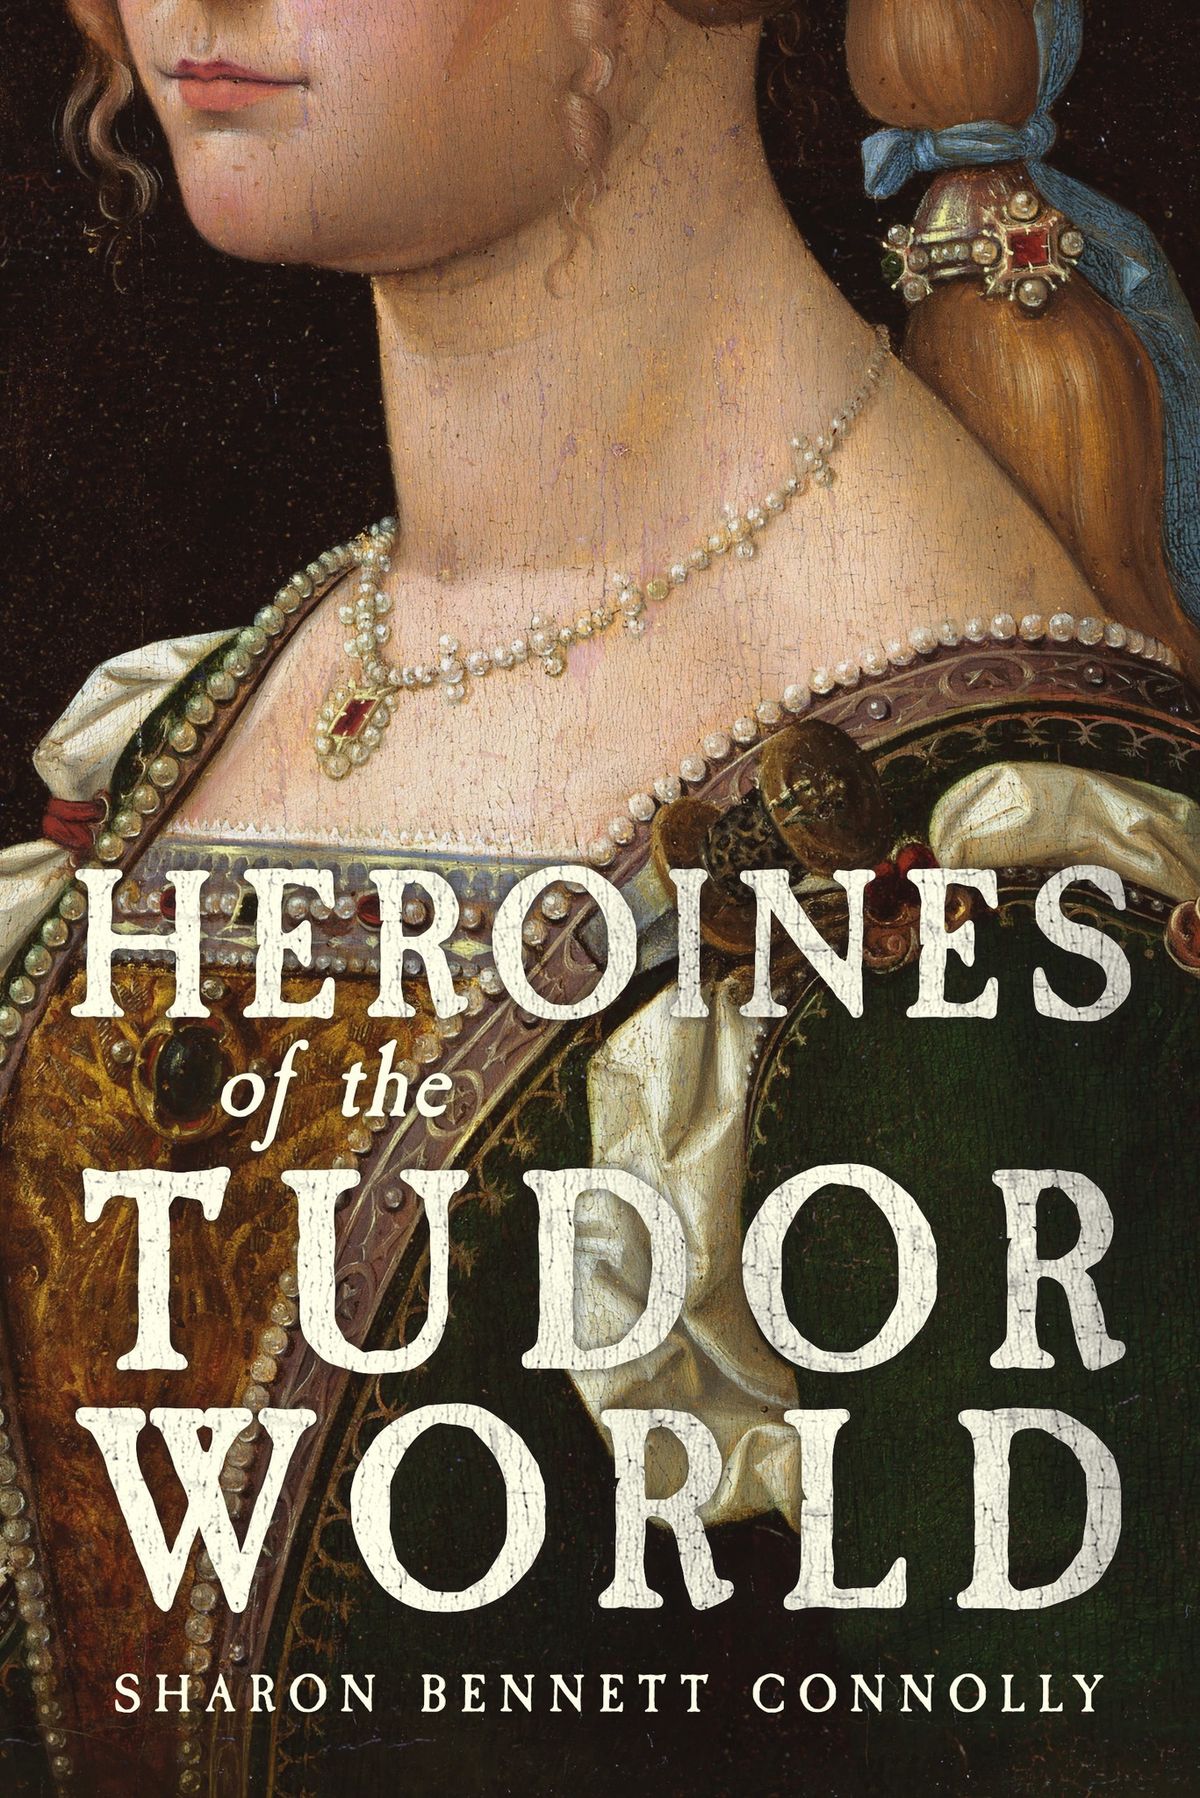 An Evening with Sharon Bennett Connolly - Heroines of the Tudor World